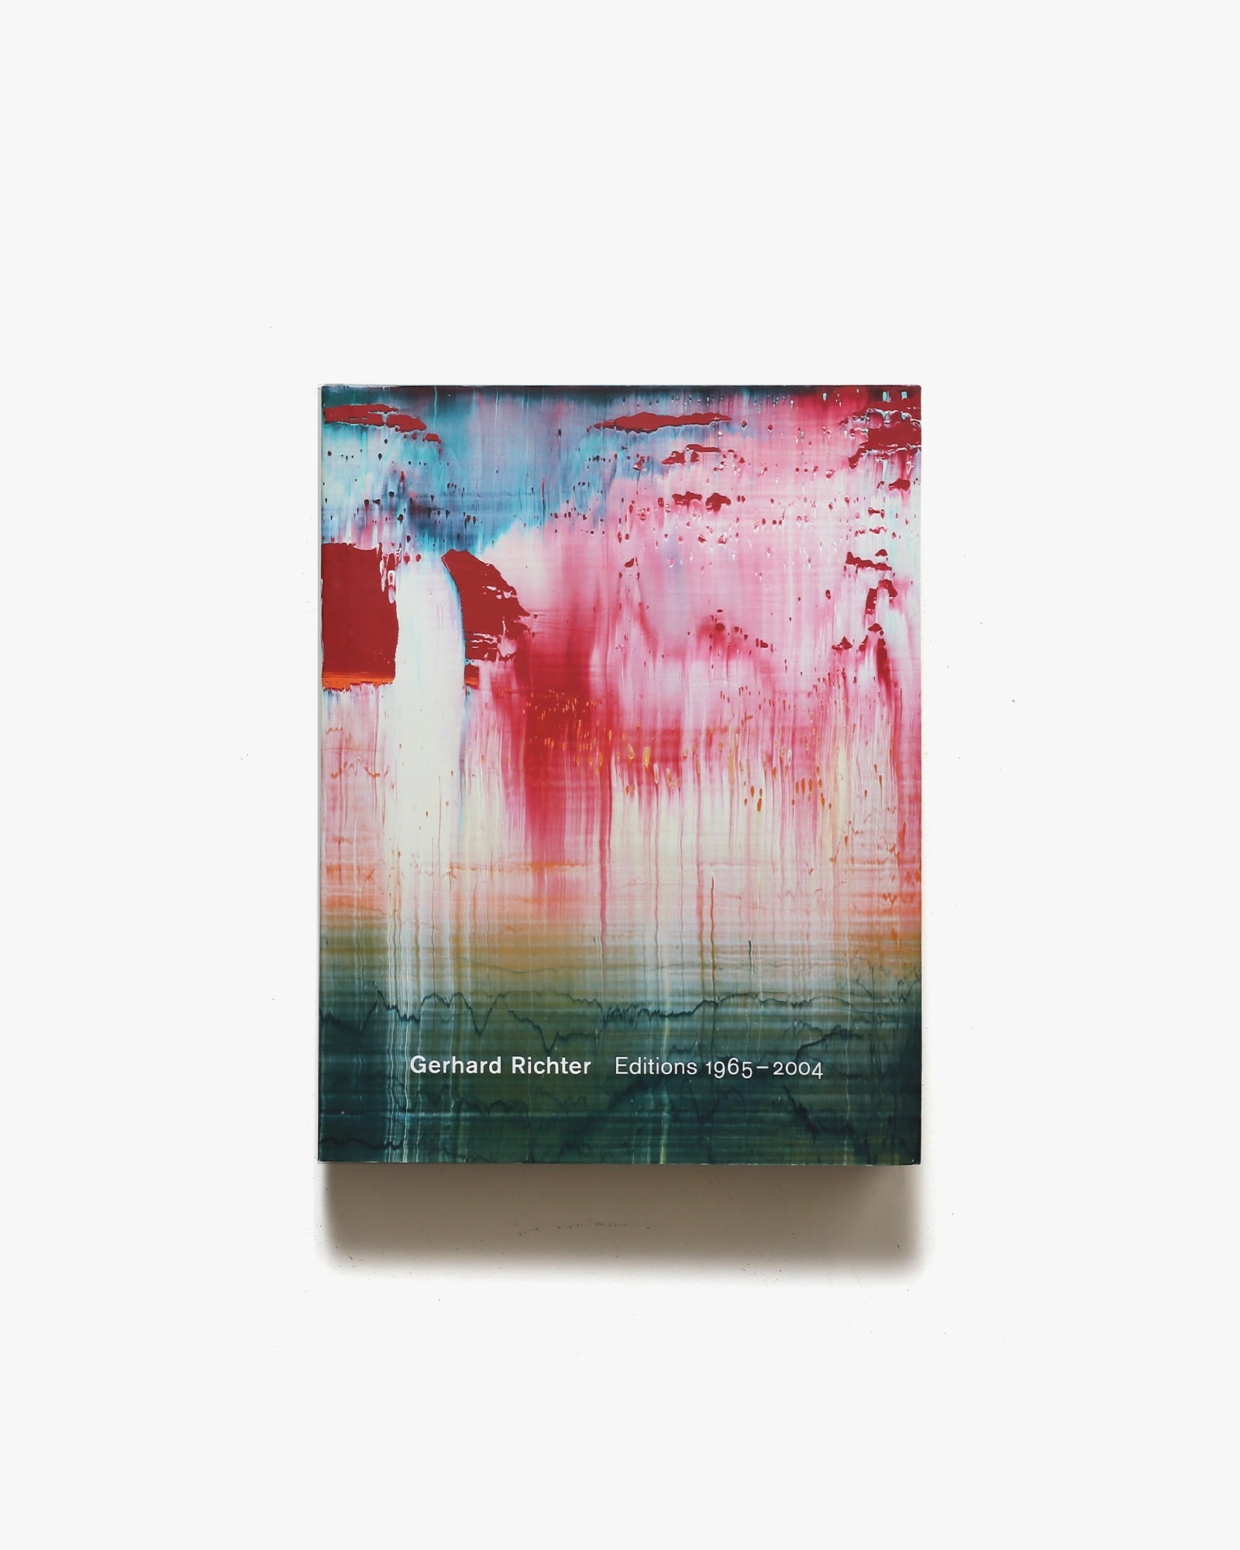 Gerhard Richter: Editions 1965-2004, Catalogue Raisonne | ゲルハルト・リヒター